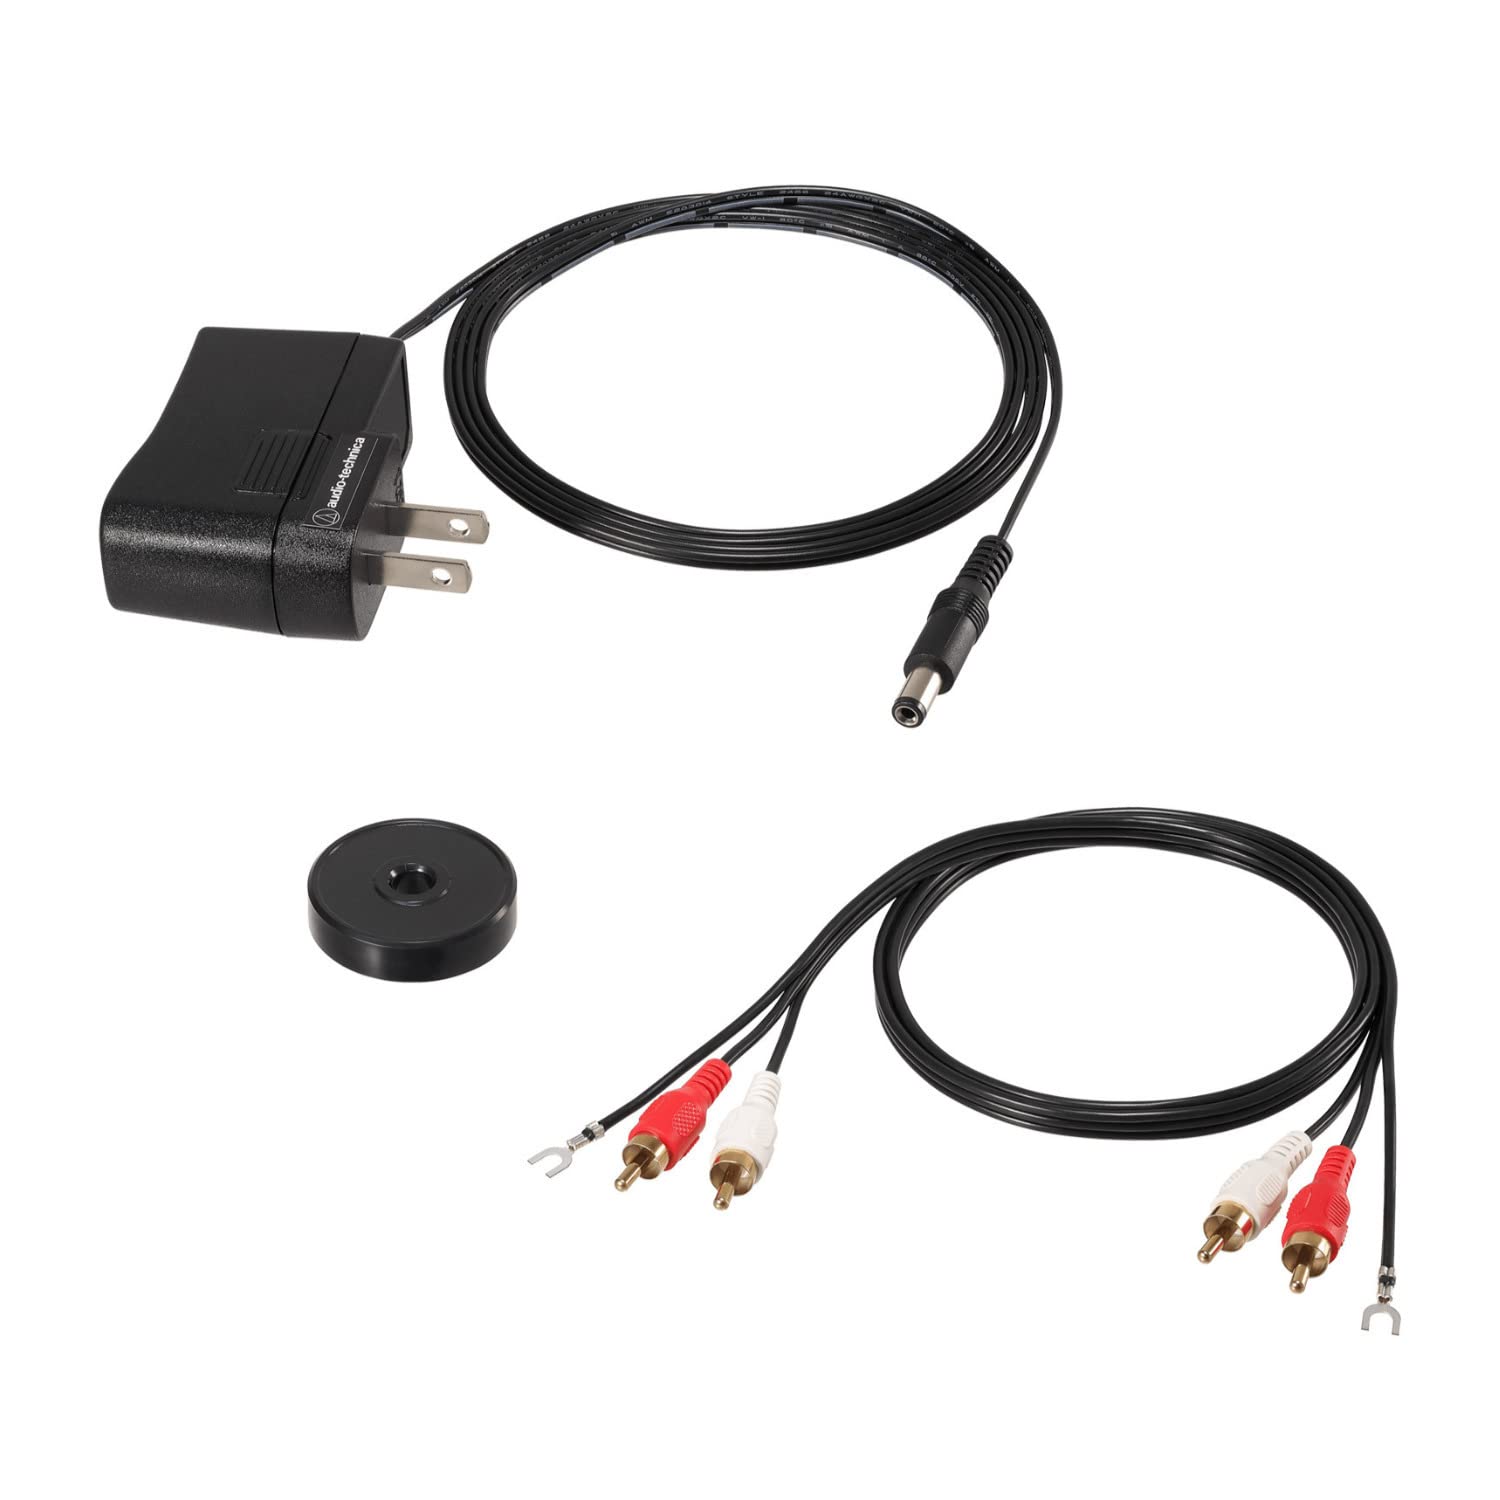 Audio-Technica AT-LPW50PB Fully Manual Belt-Drive Turntable